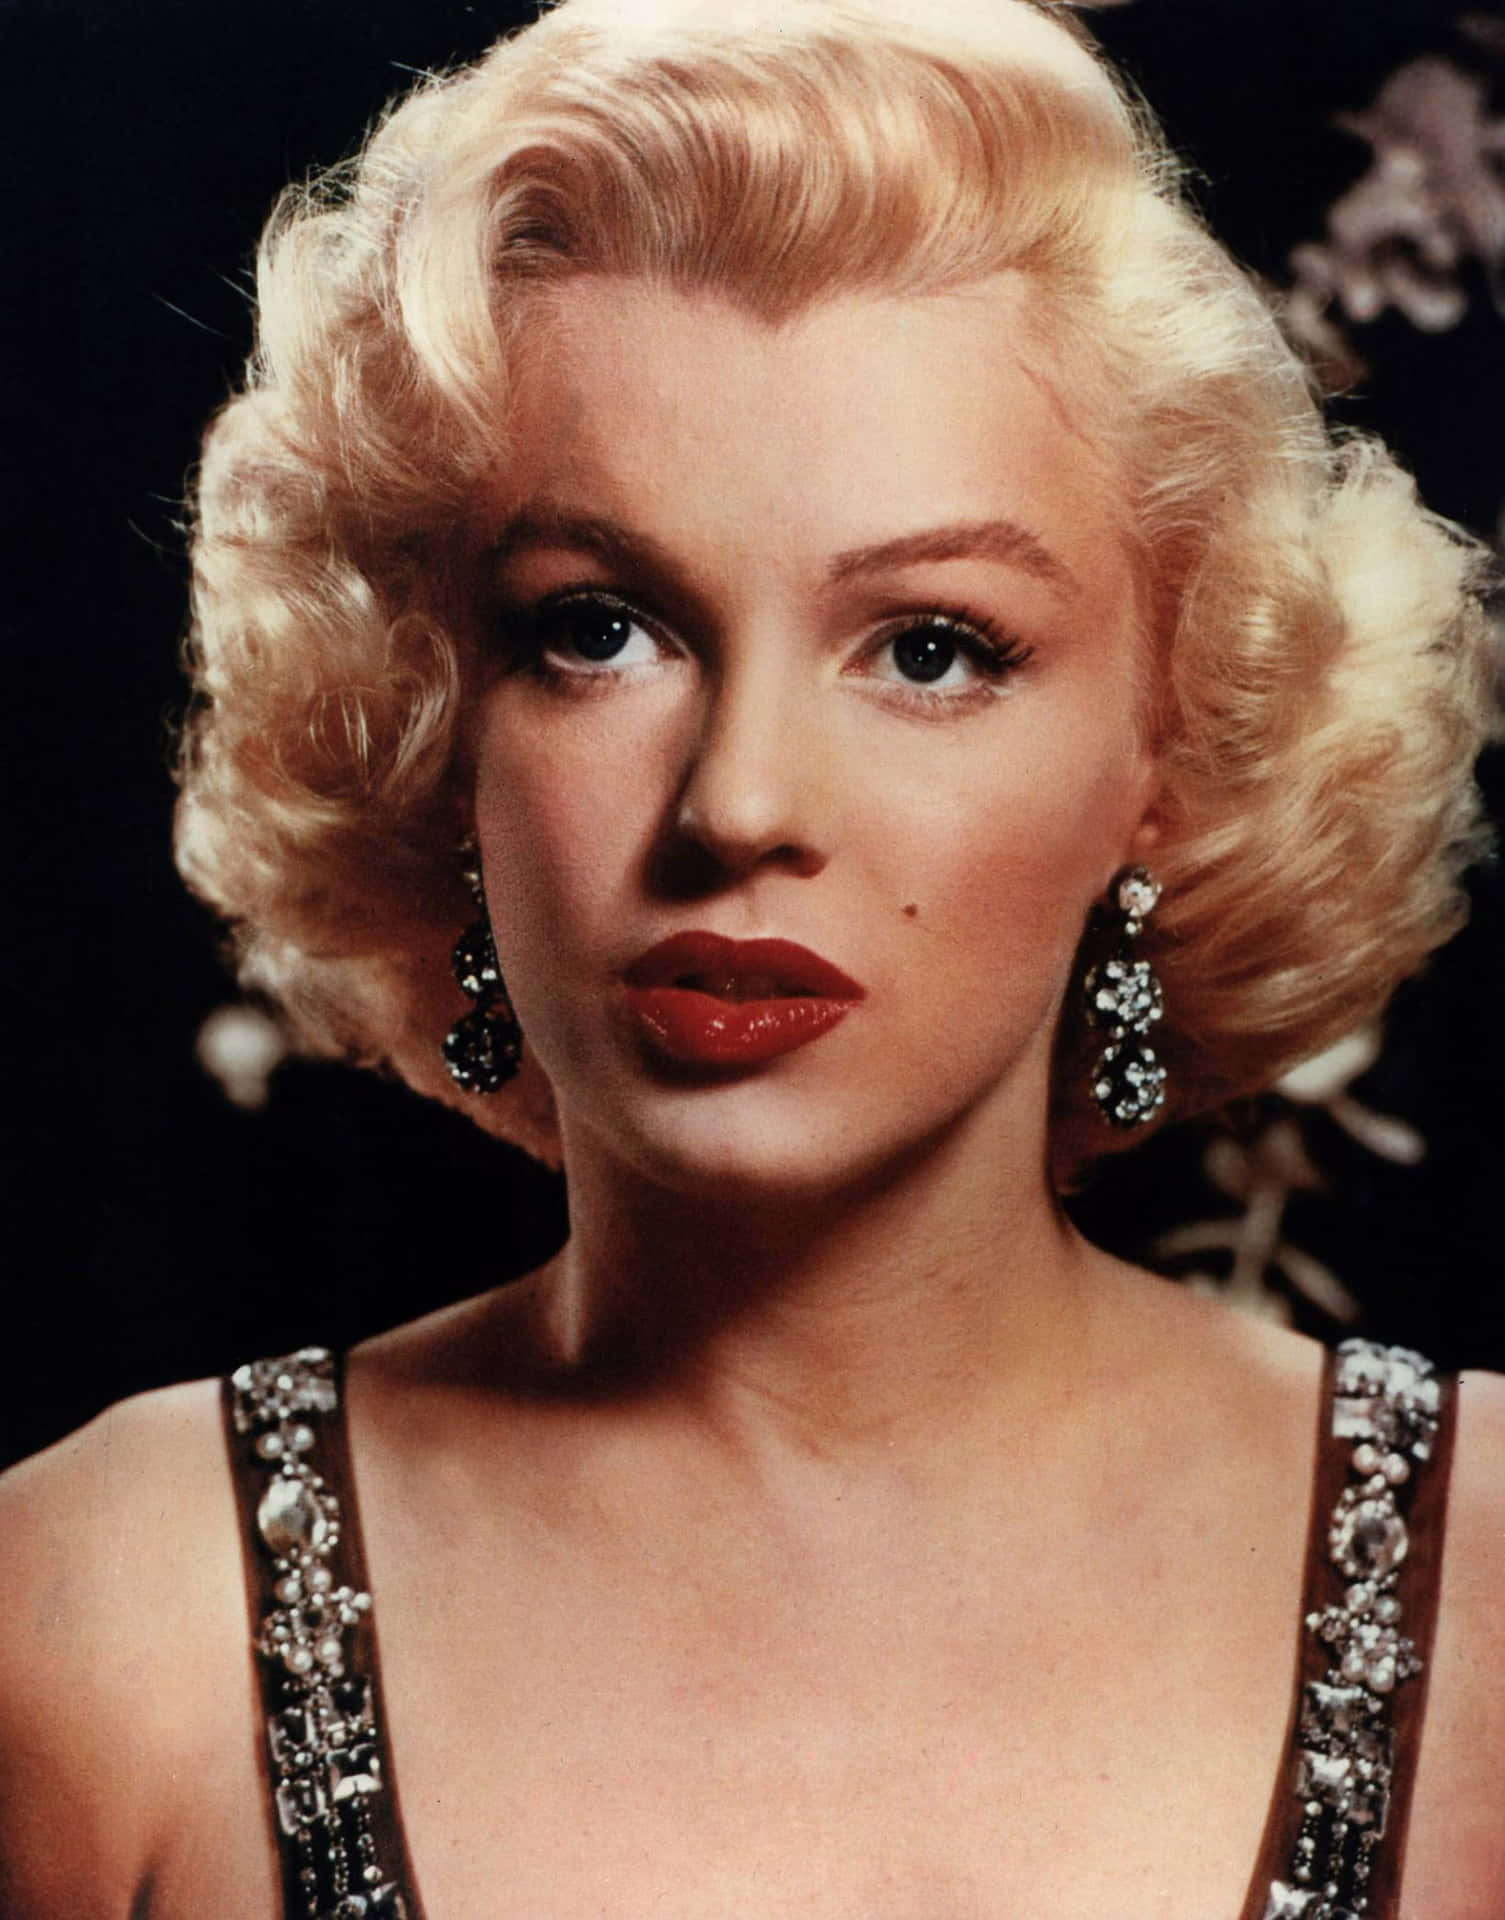 Klassischeschönheit - Marilyn Monroe